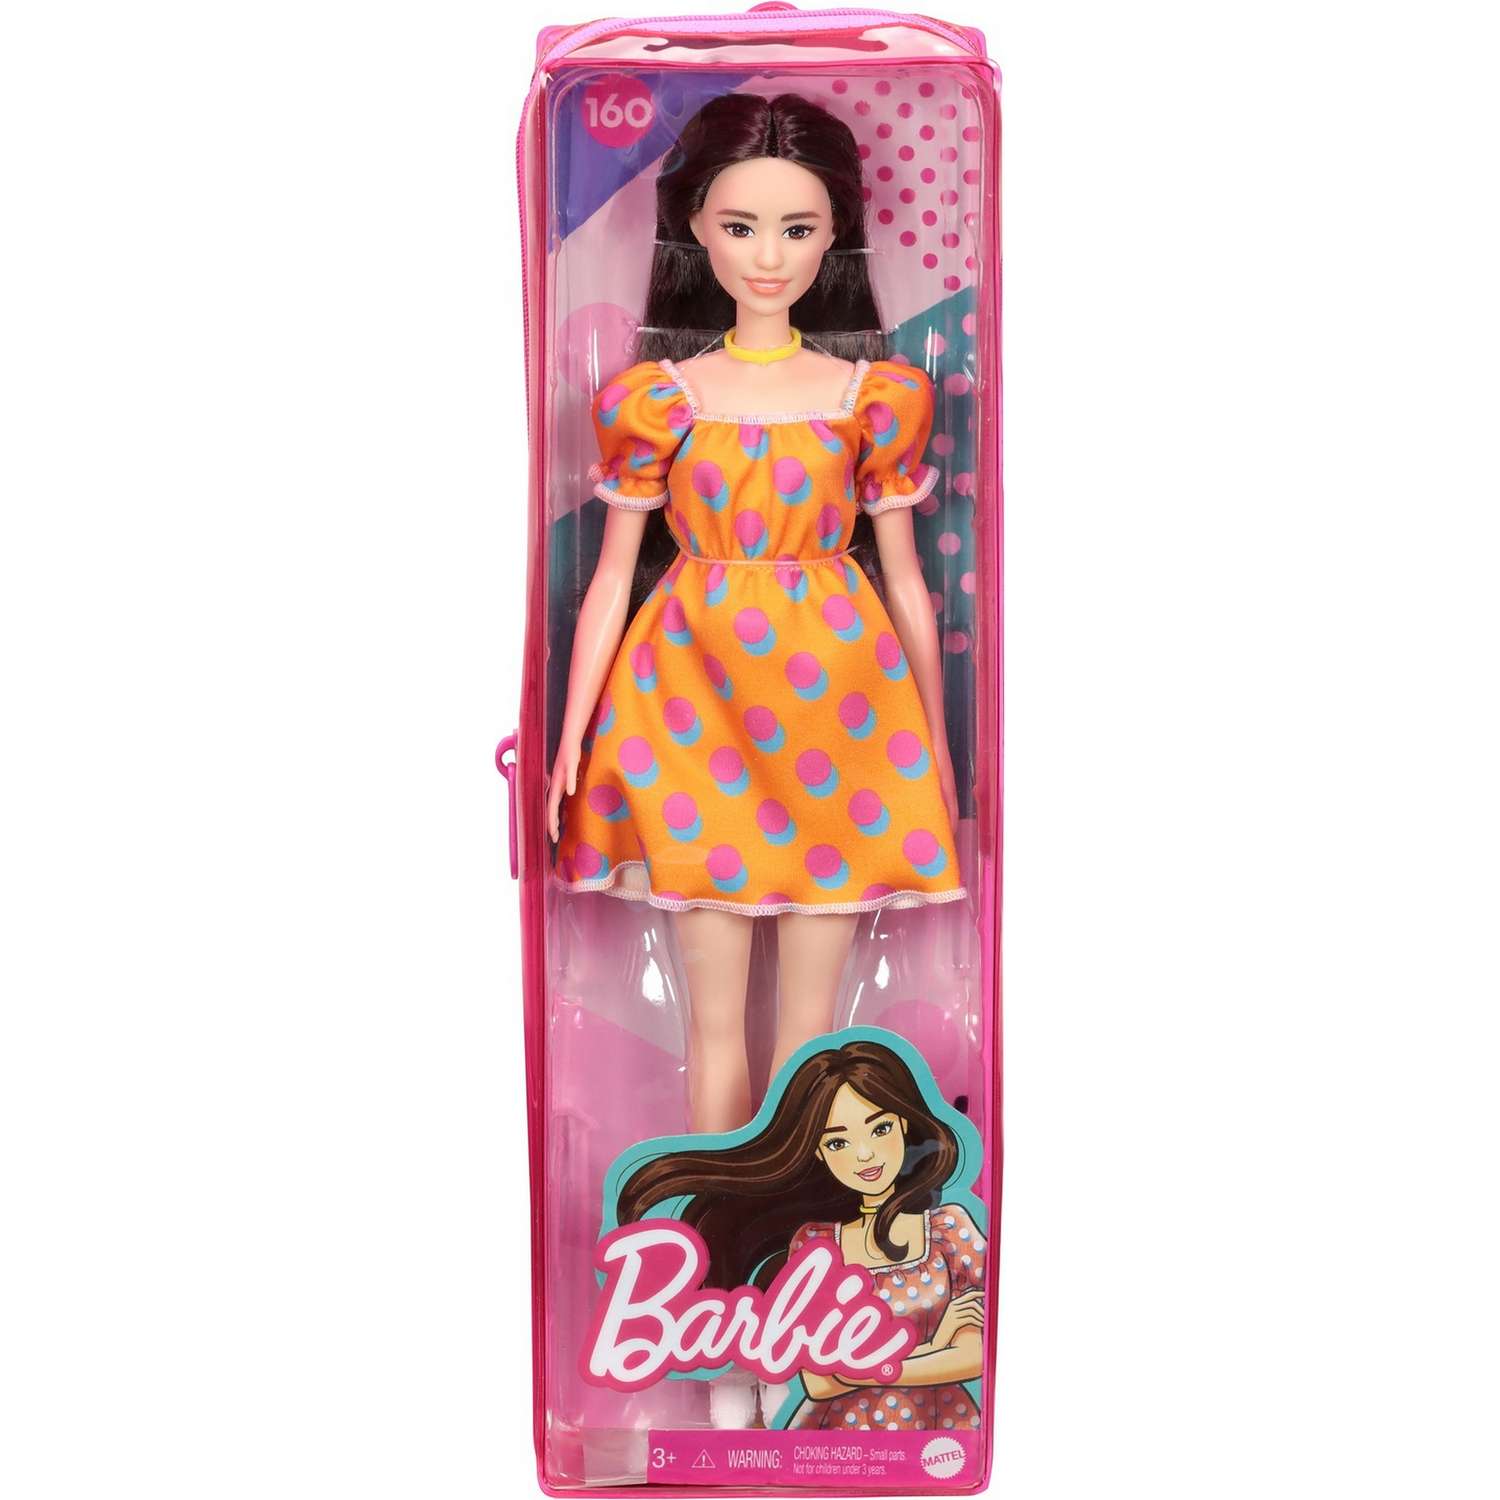 Кукла Barbie Игра с модой 160 GRB52 FBR37 - фото 2